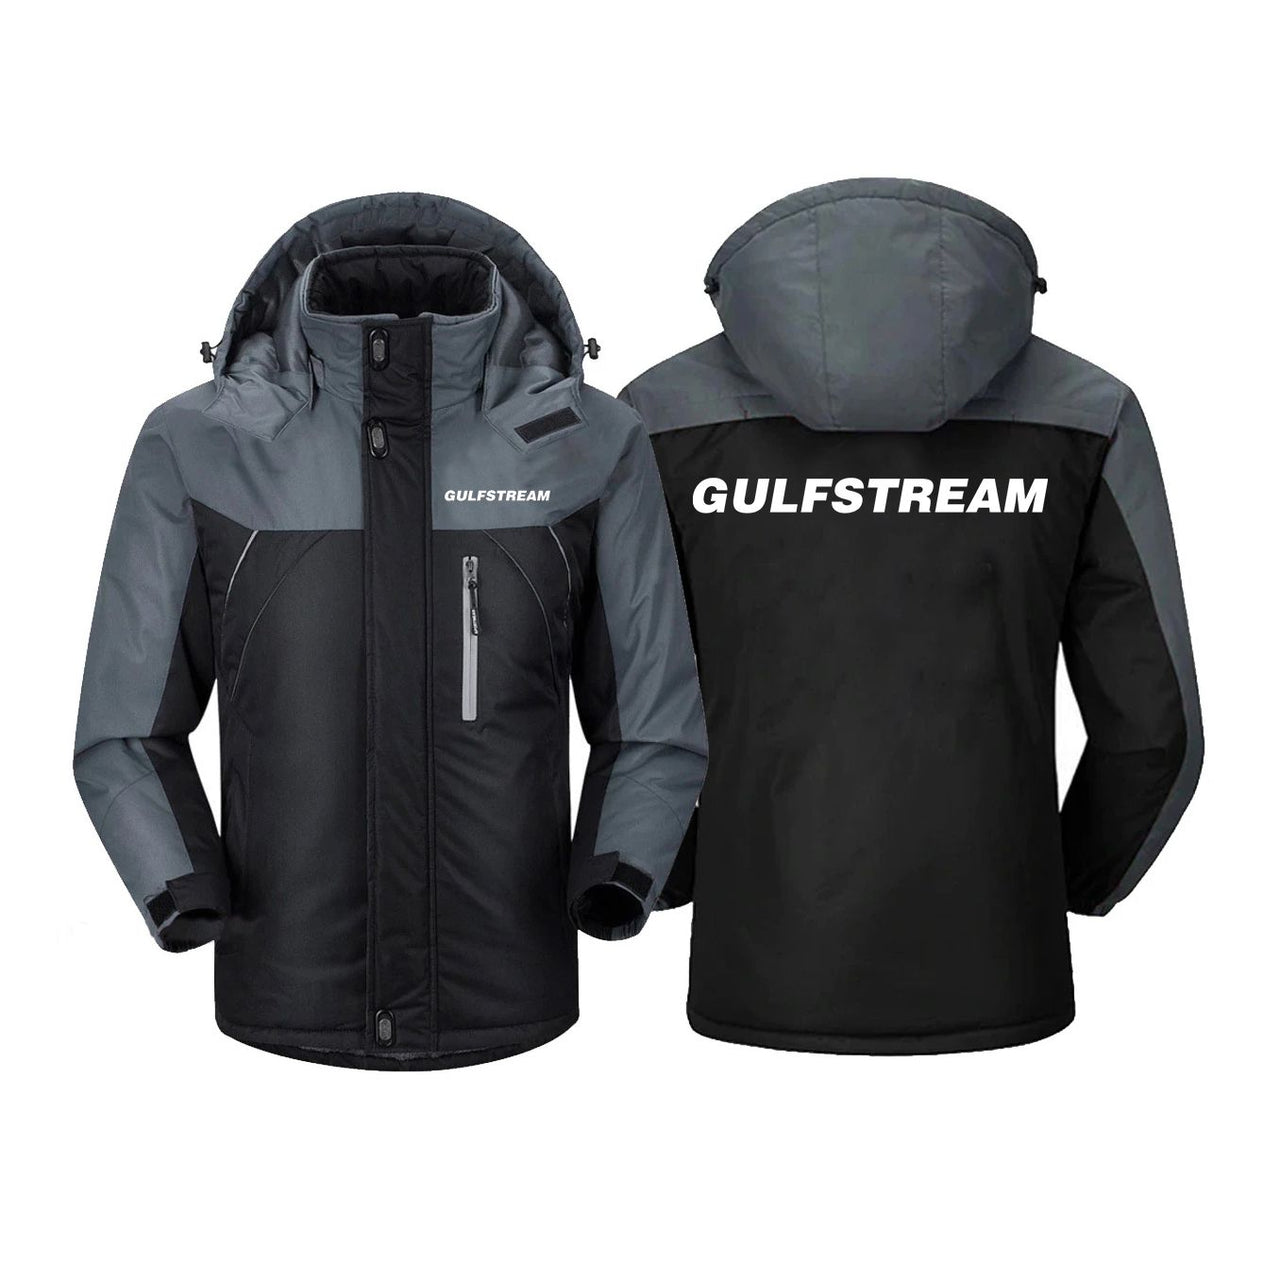 Gulfstream & Text Designed Thick Winter Jackets